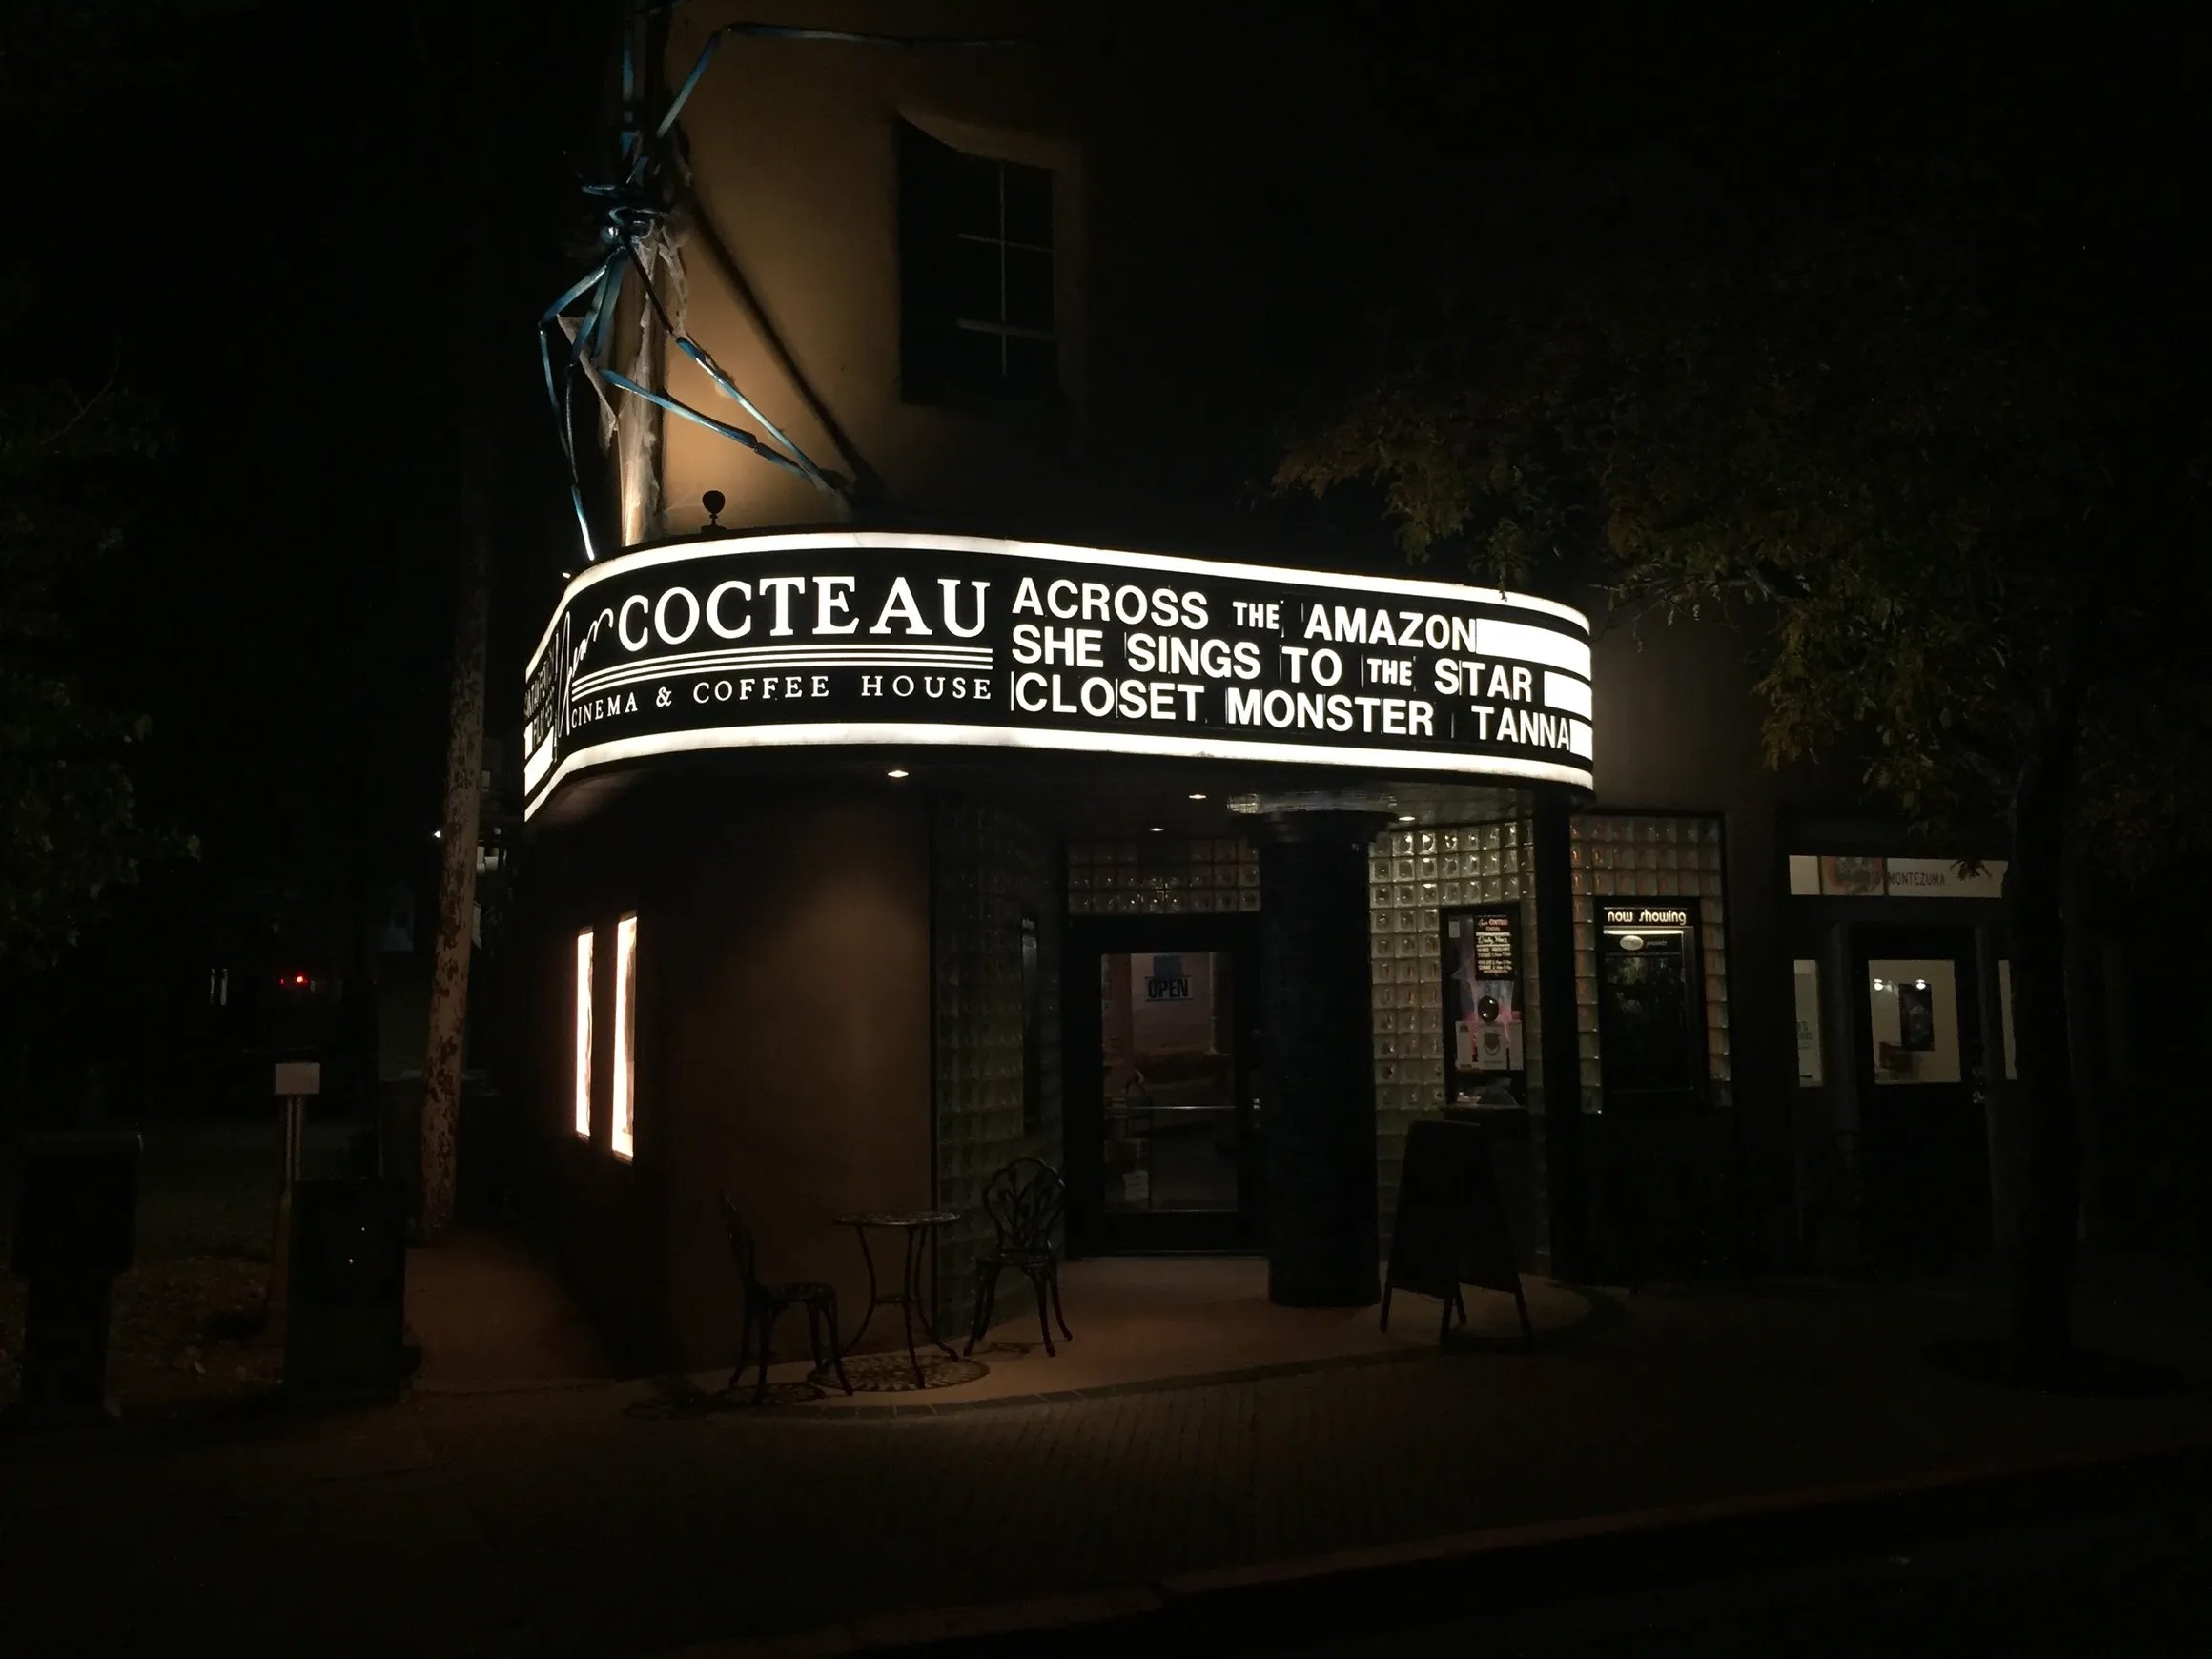  Jean Cocteau Theater, Santa Fe, NM, Photo LKM 